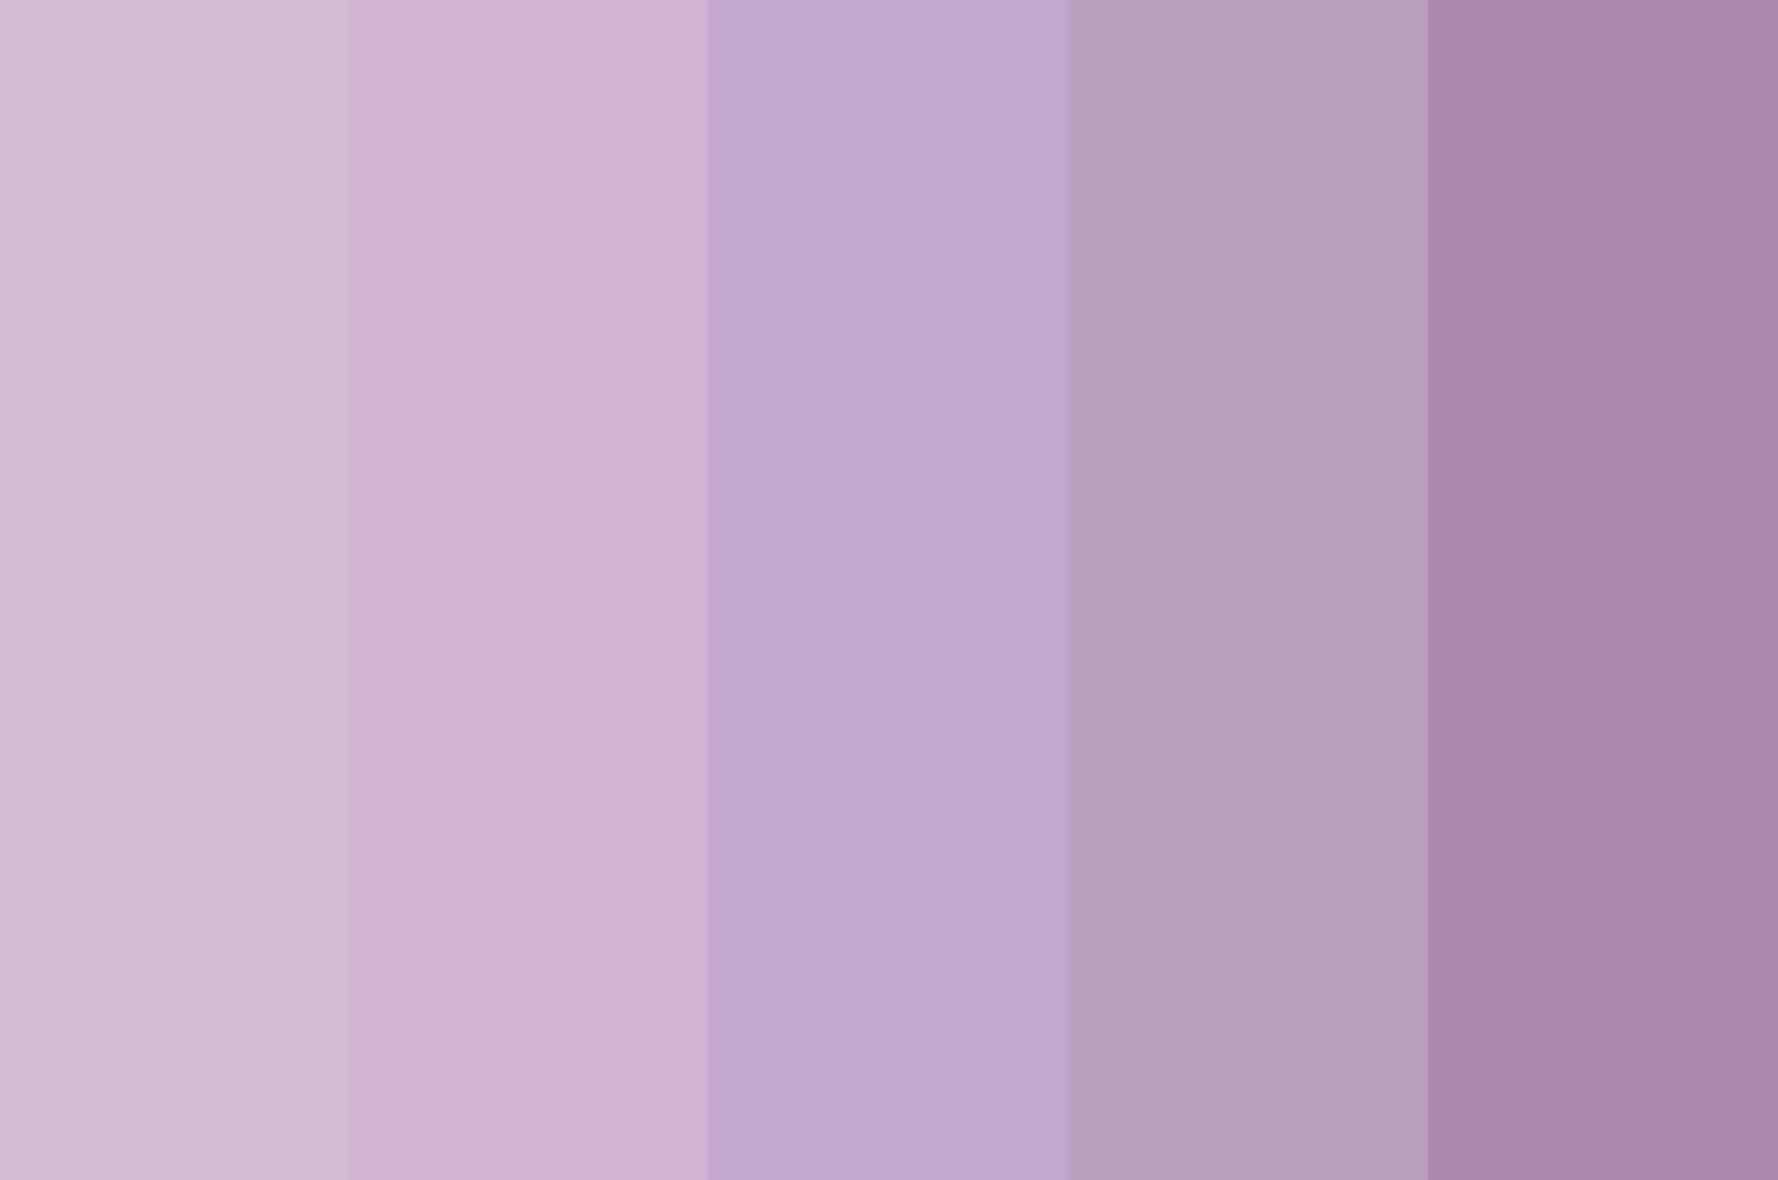 5. Pastel shades like light pink or lavender - wide 6